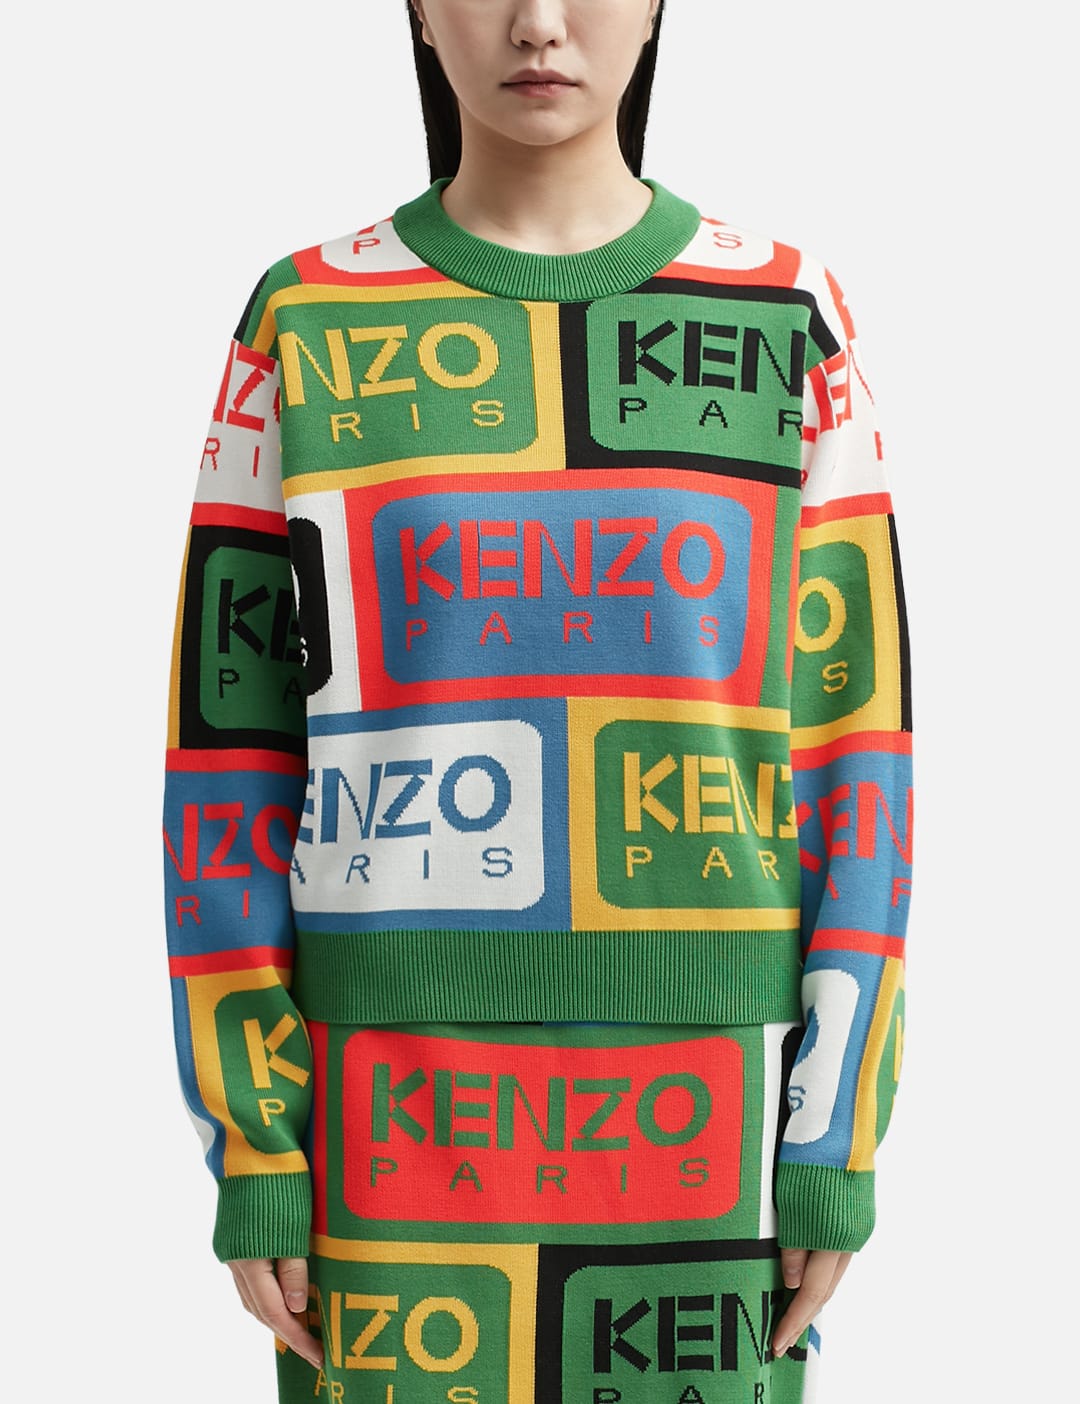 Kenzo - KENZO PARIS LABEL SWEATER | HBX - Globally Curated Fashion